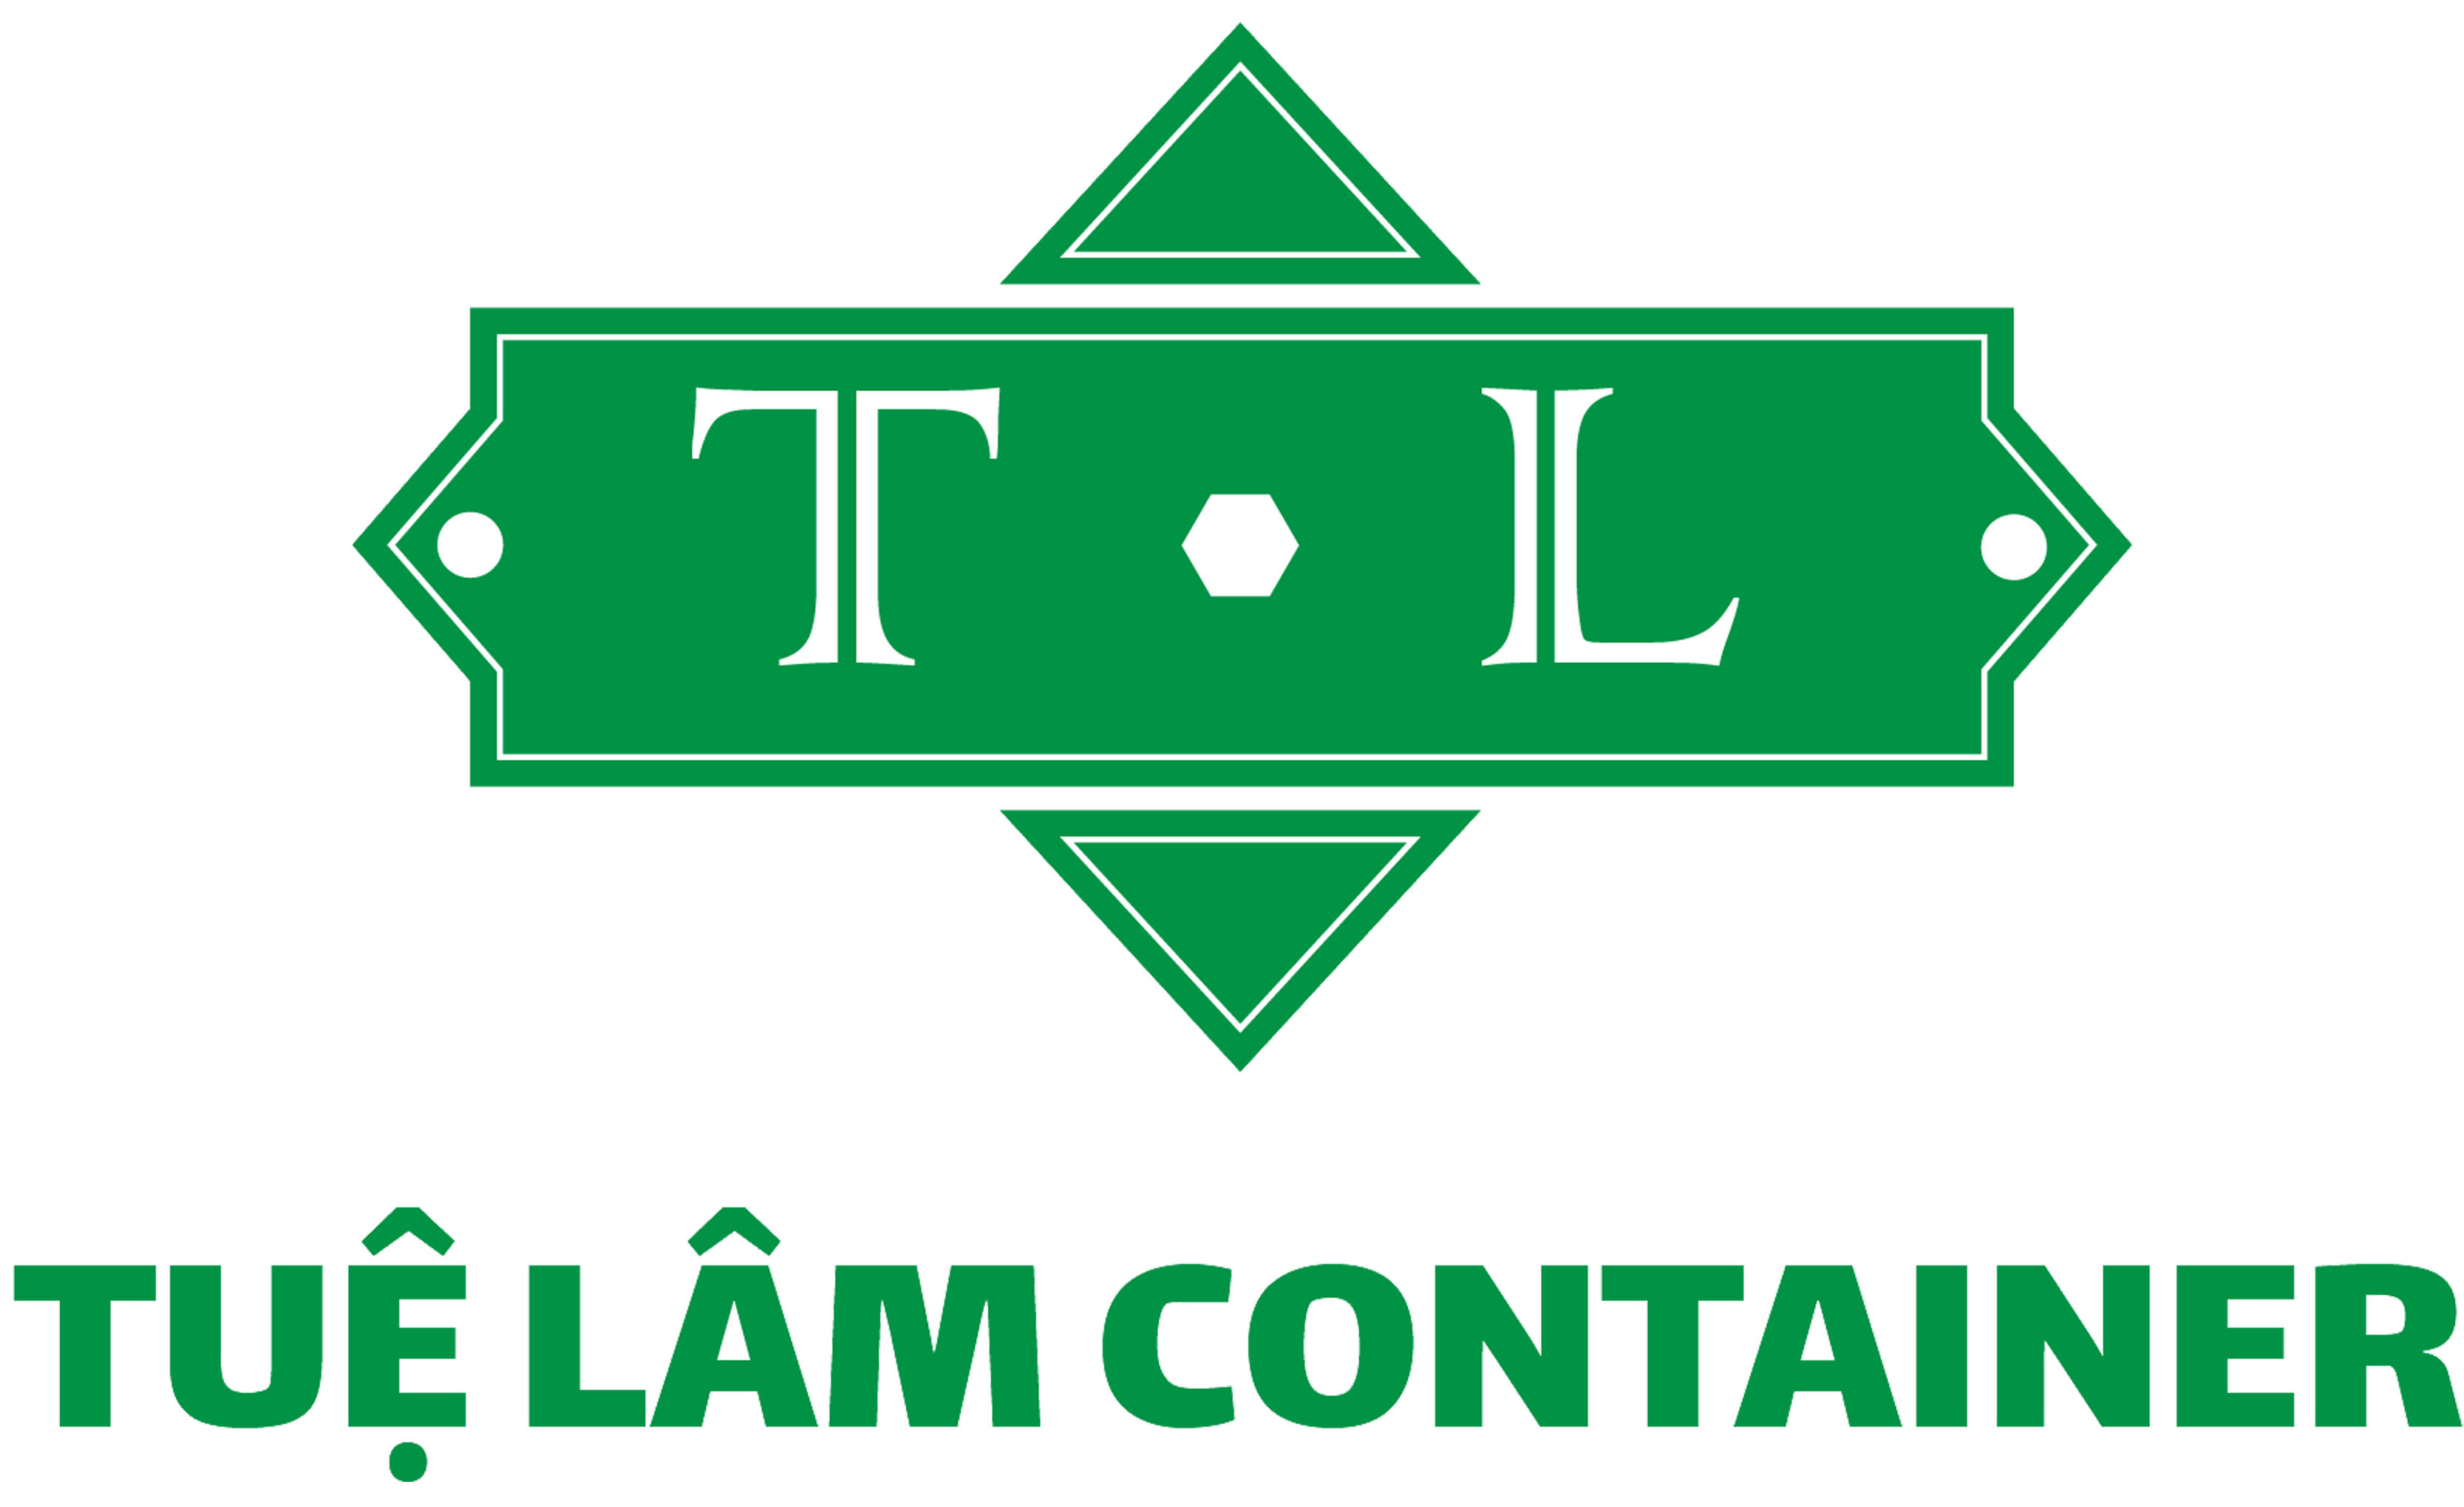 Container Tuệ Lâm